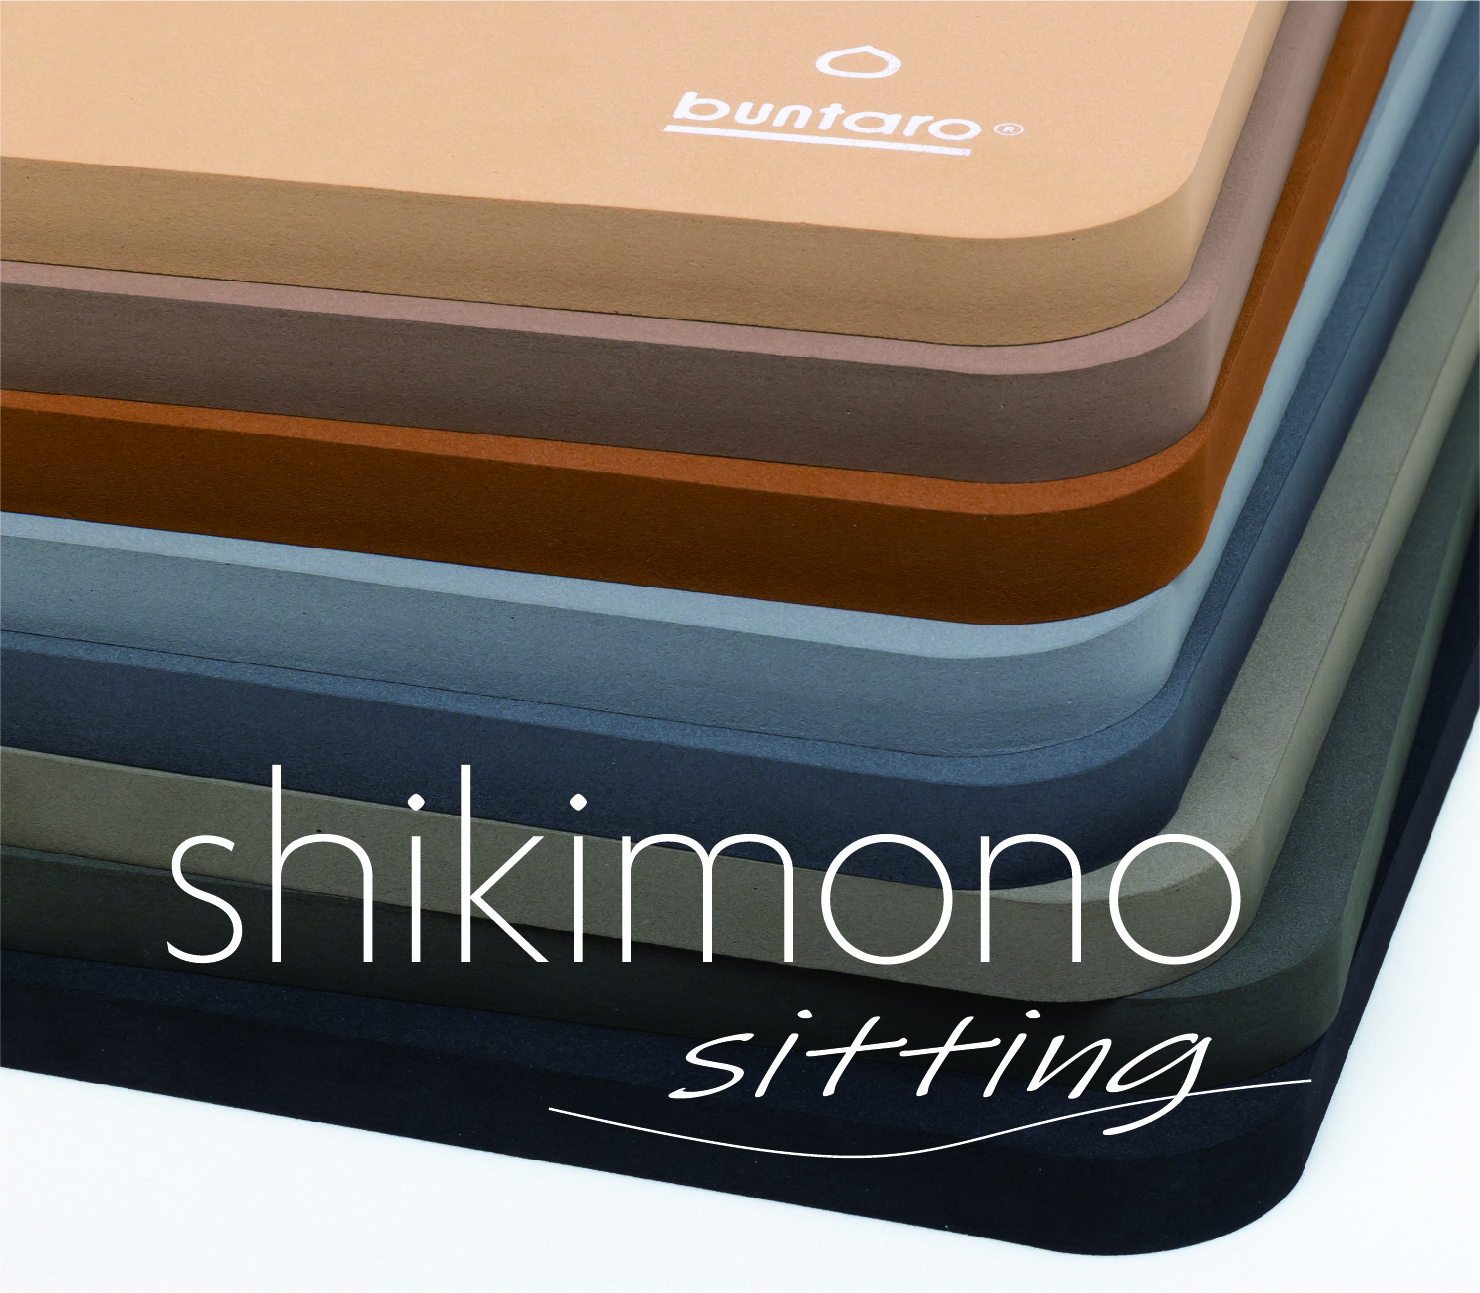 shikimono sitting